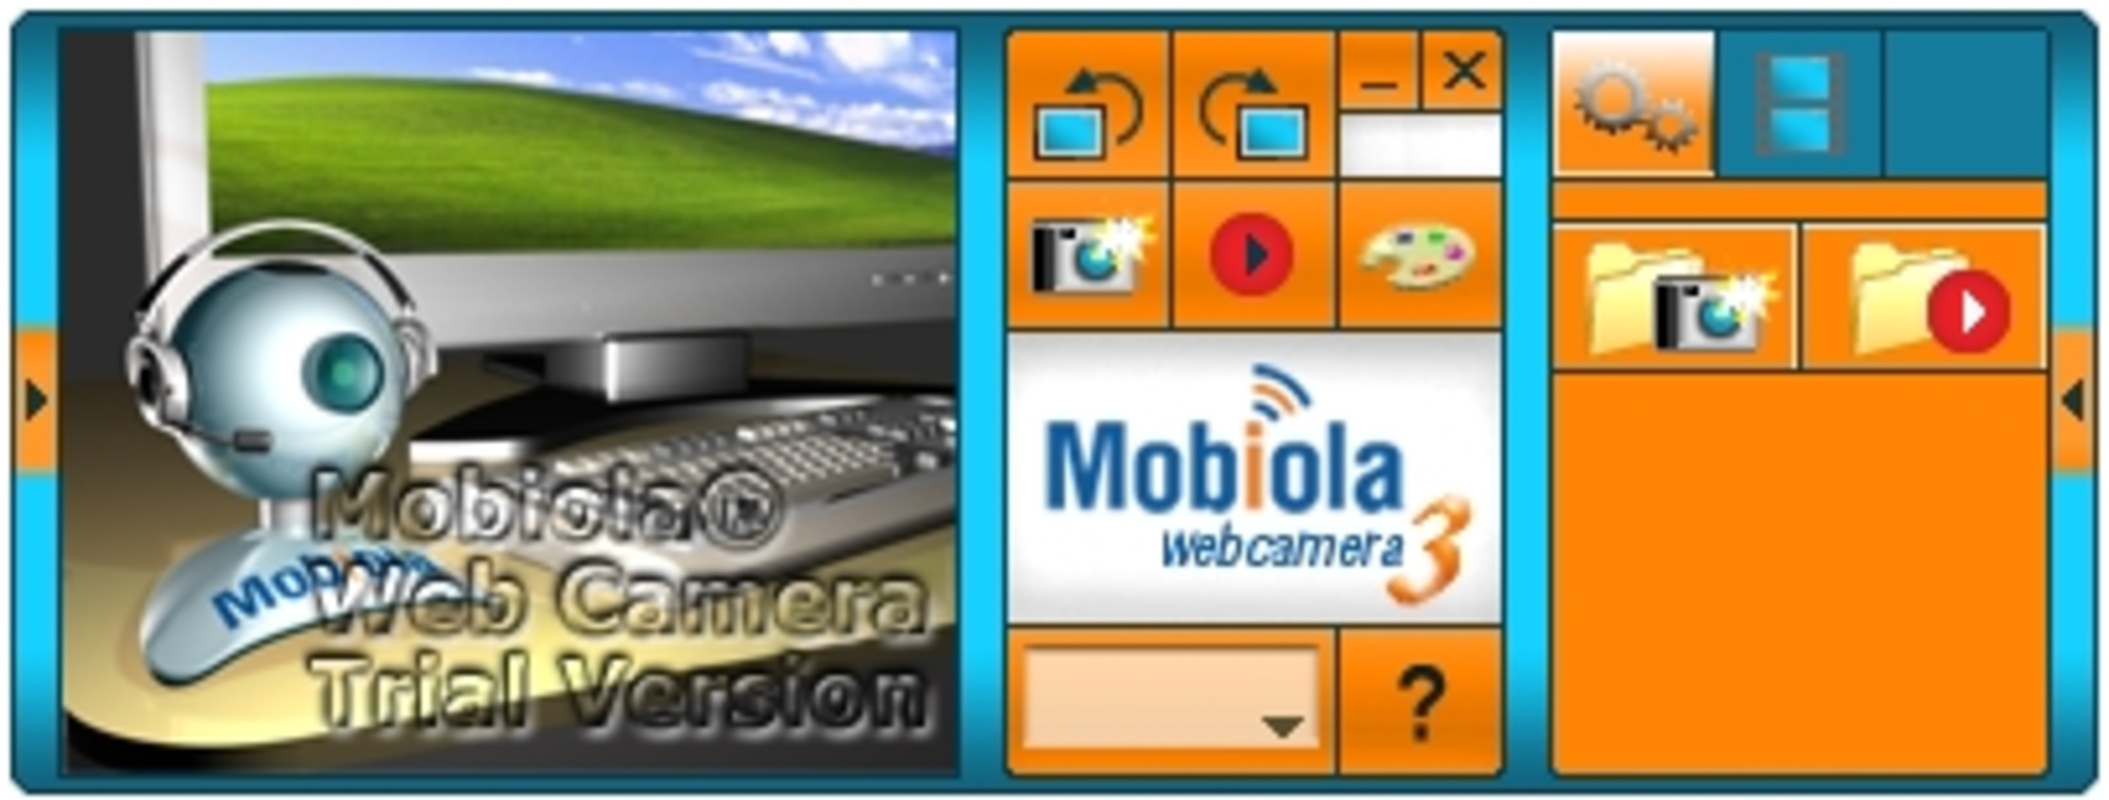 Mobiola Web Camera 3.1.8 for Windows Screenshot 1